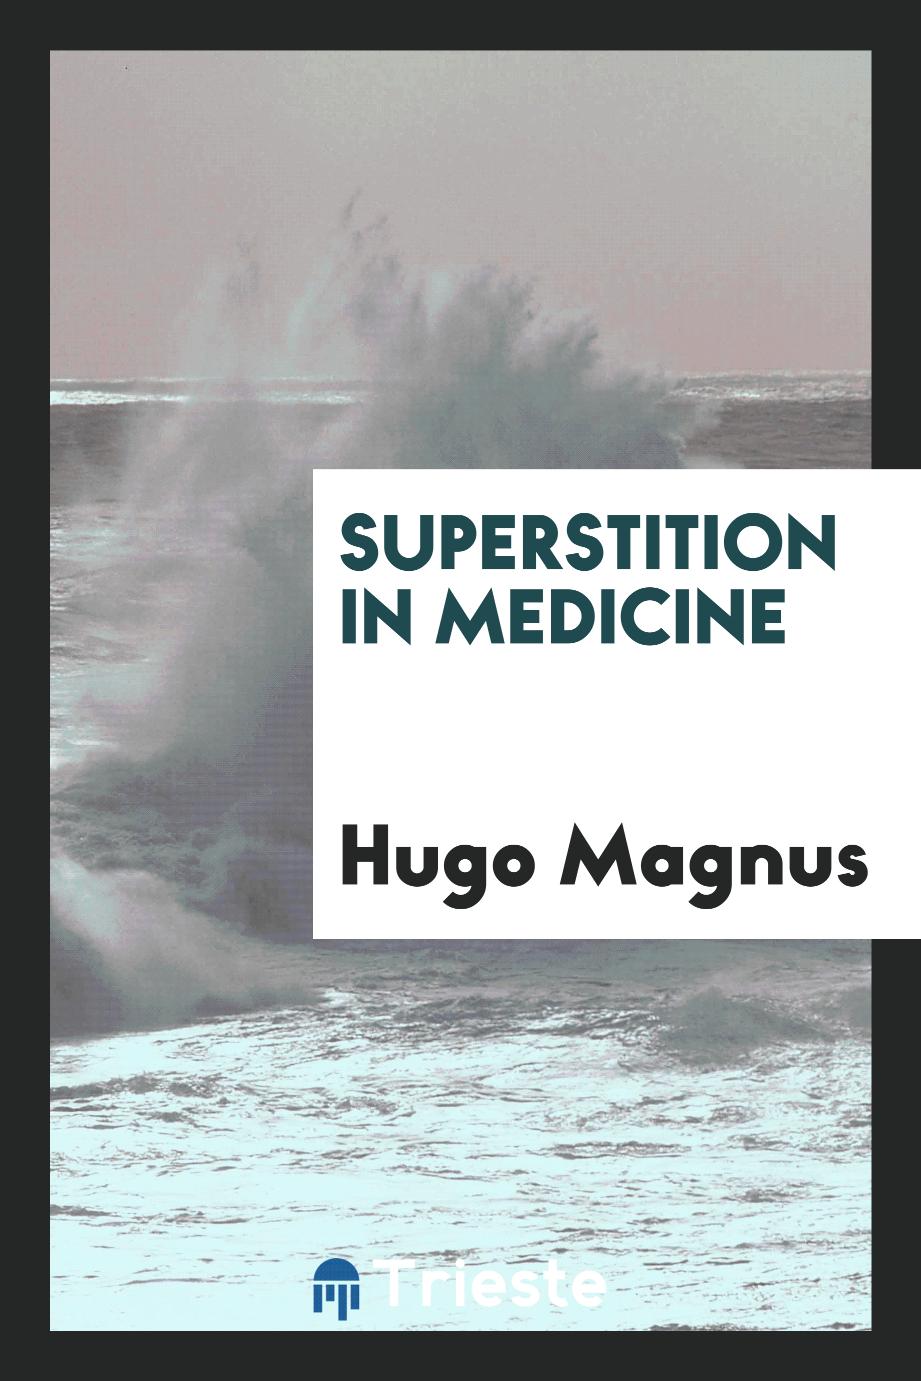 Superstition in medicine